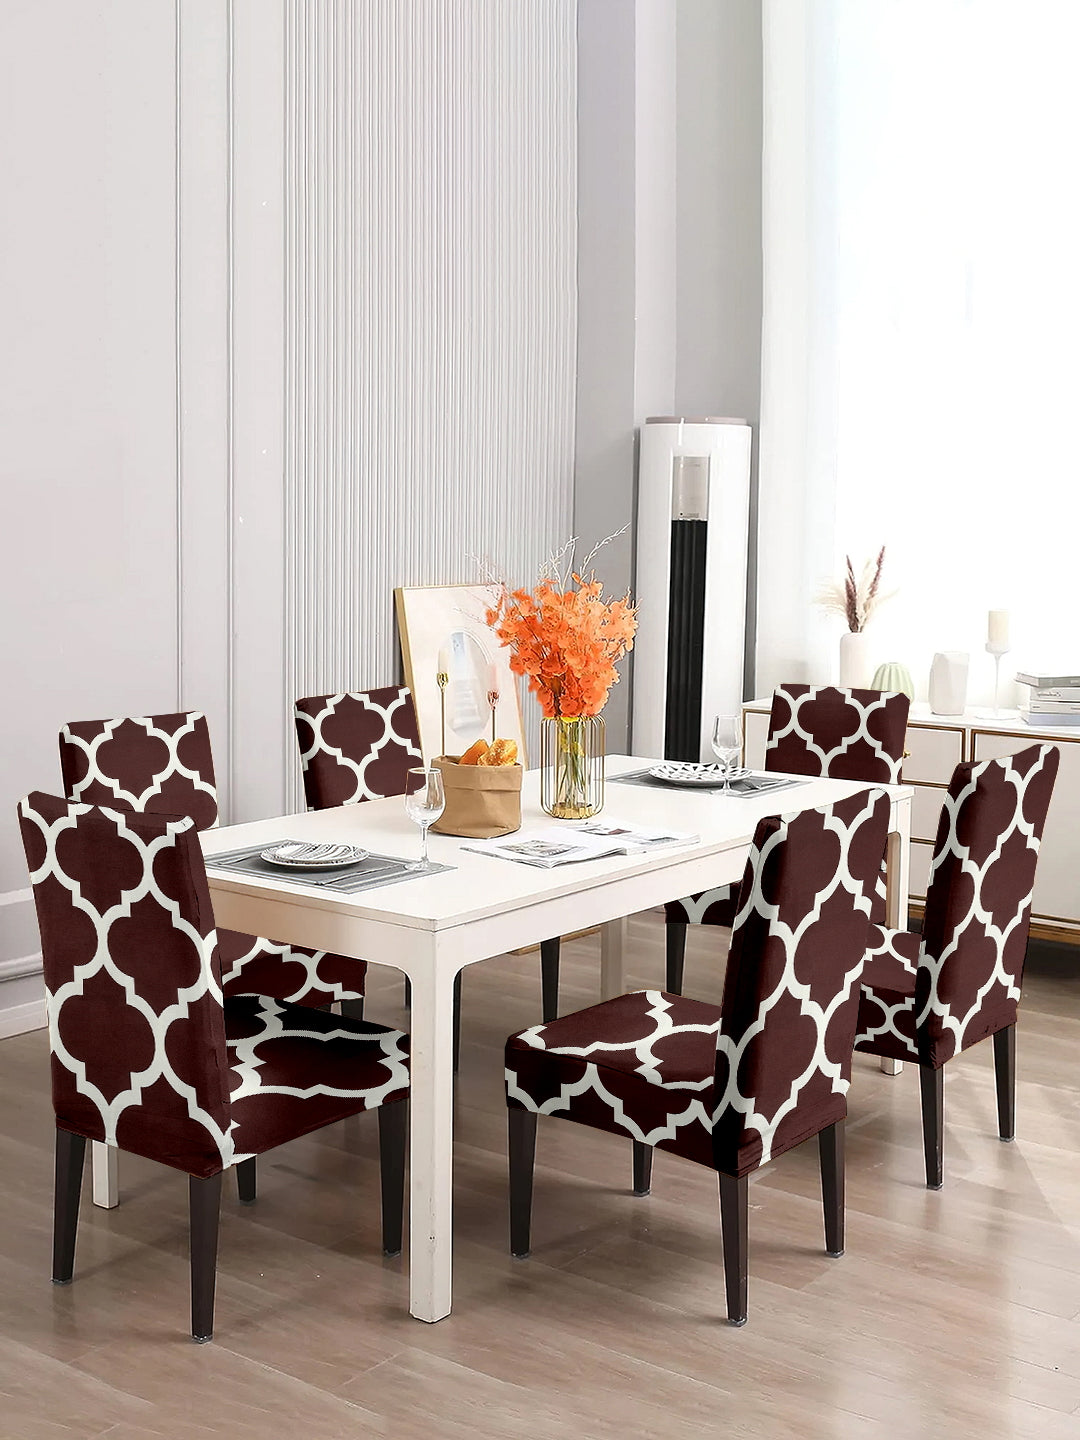 Elastic Digital Printed Non-Slip Dining Chair Covers Set of 6 - Brown